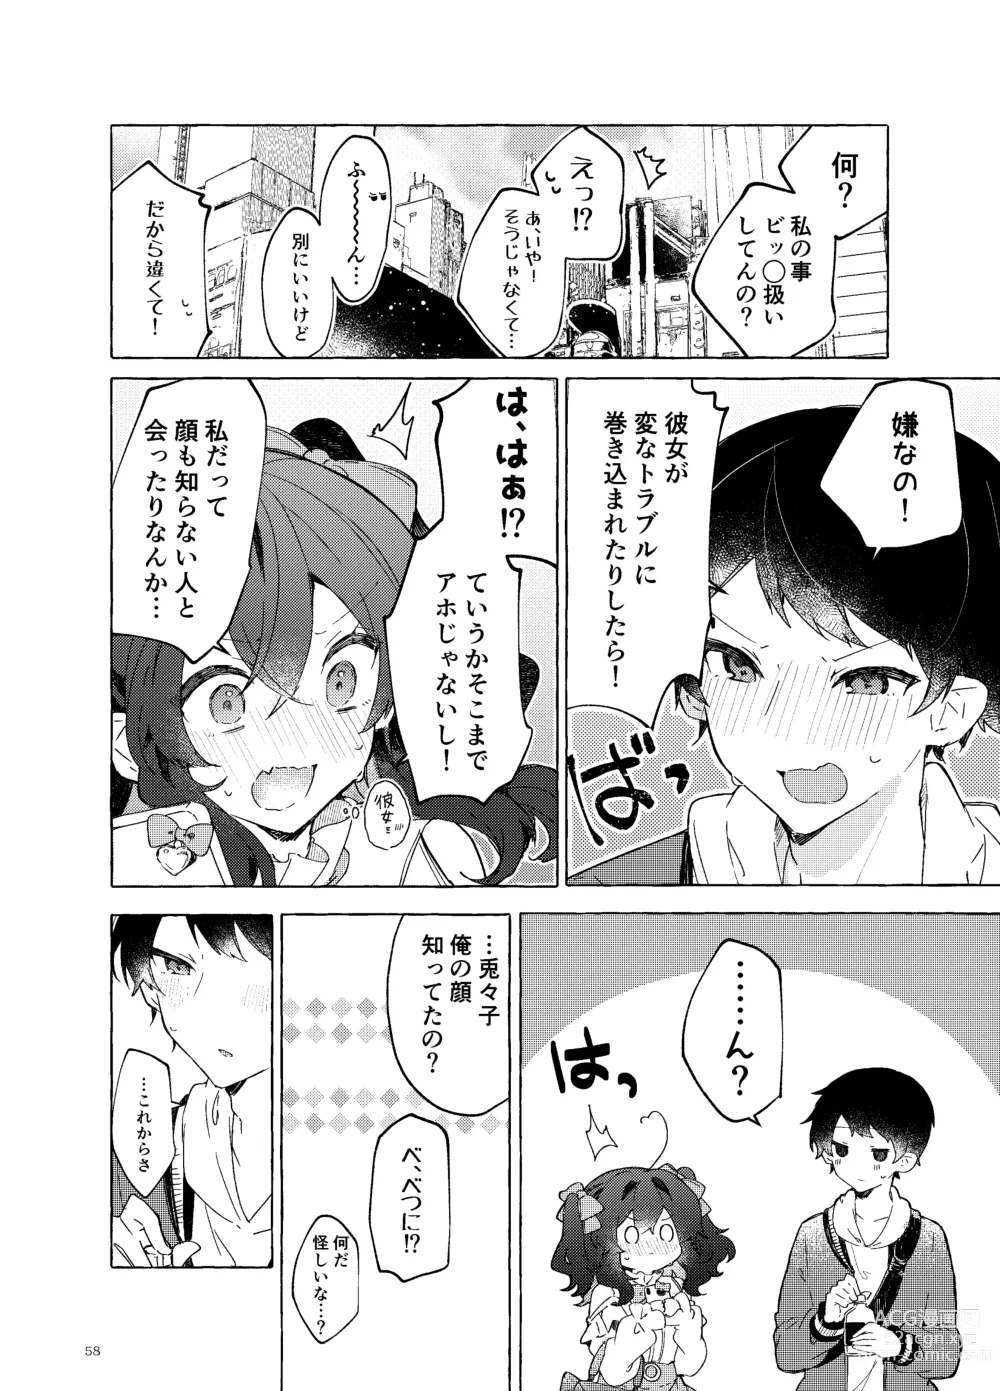 Page 59 of doujinshi Koi to Mahou to Etcetera - Love, Magic, and etc.